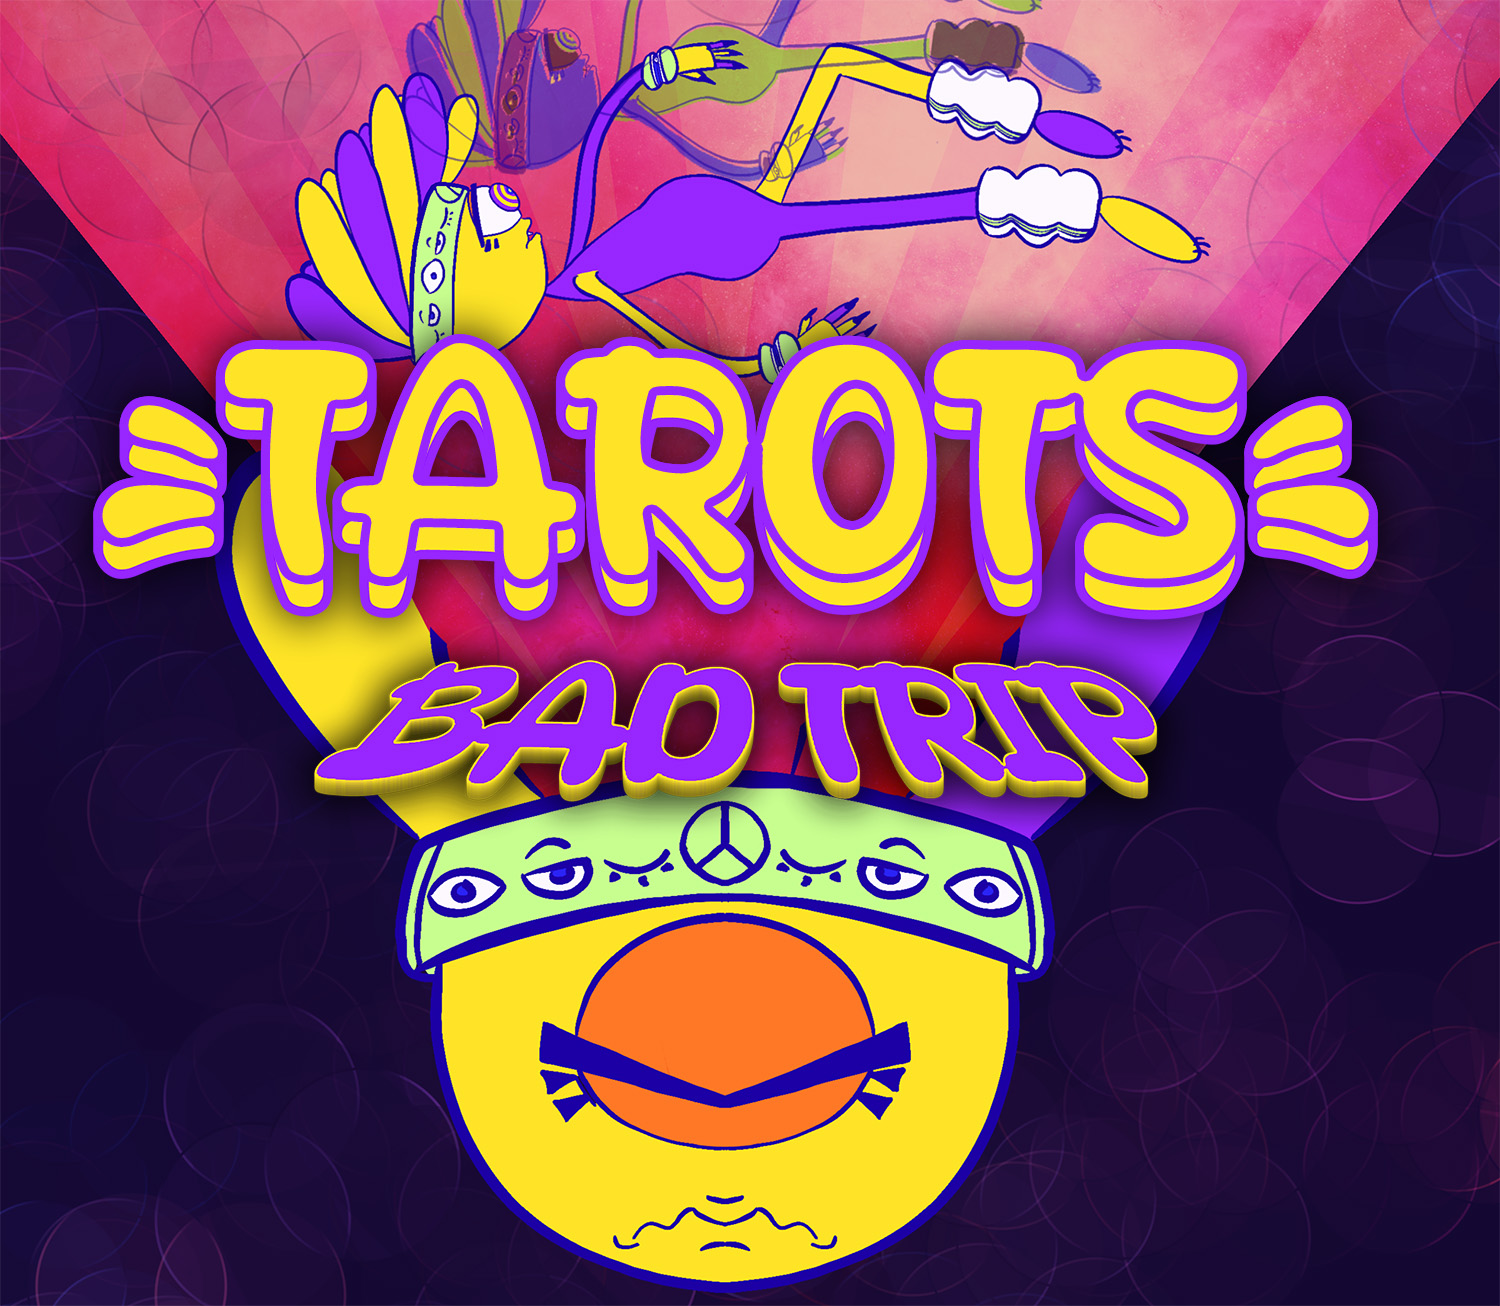 Tarot's Bad Trip